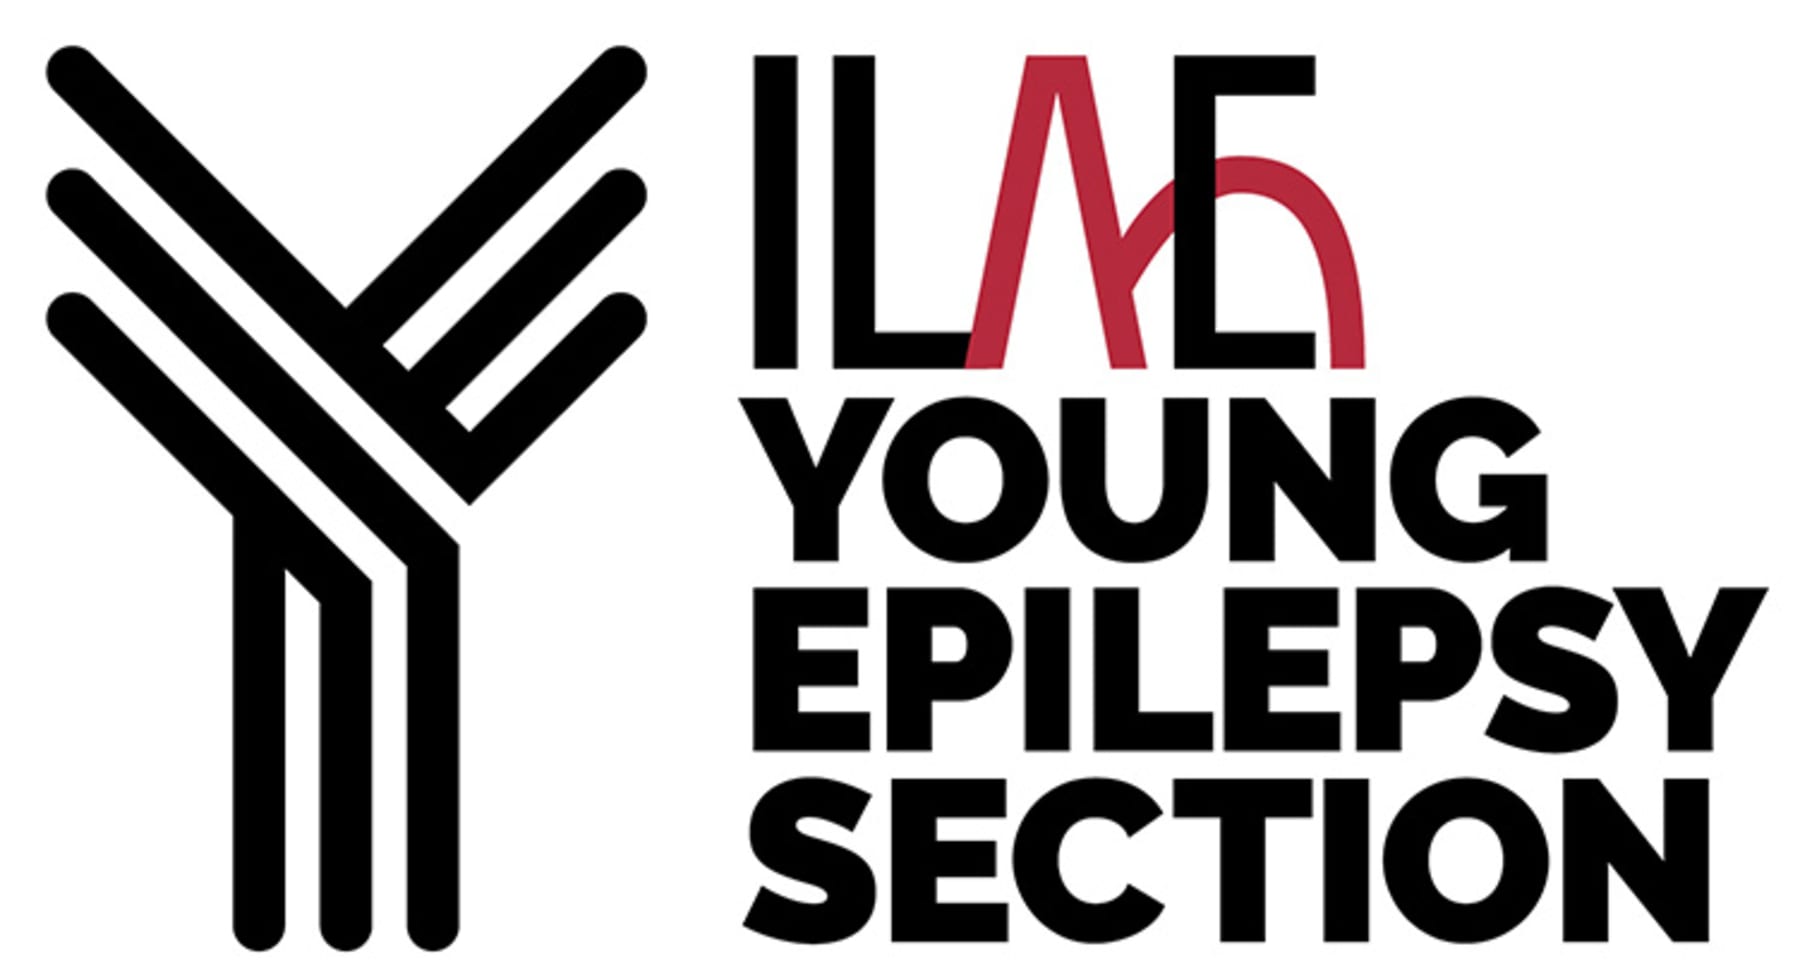 Young Epilepsy Section Yes International League Against Epilepsy